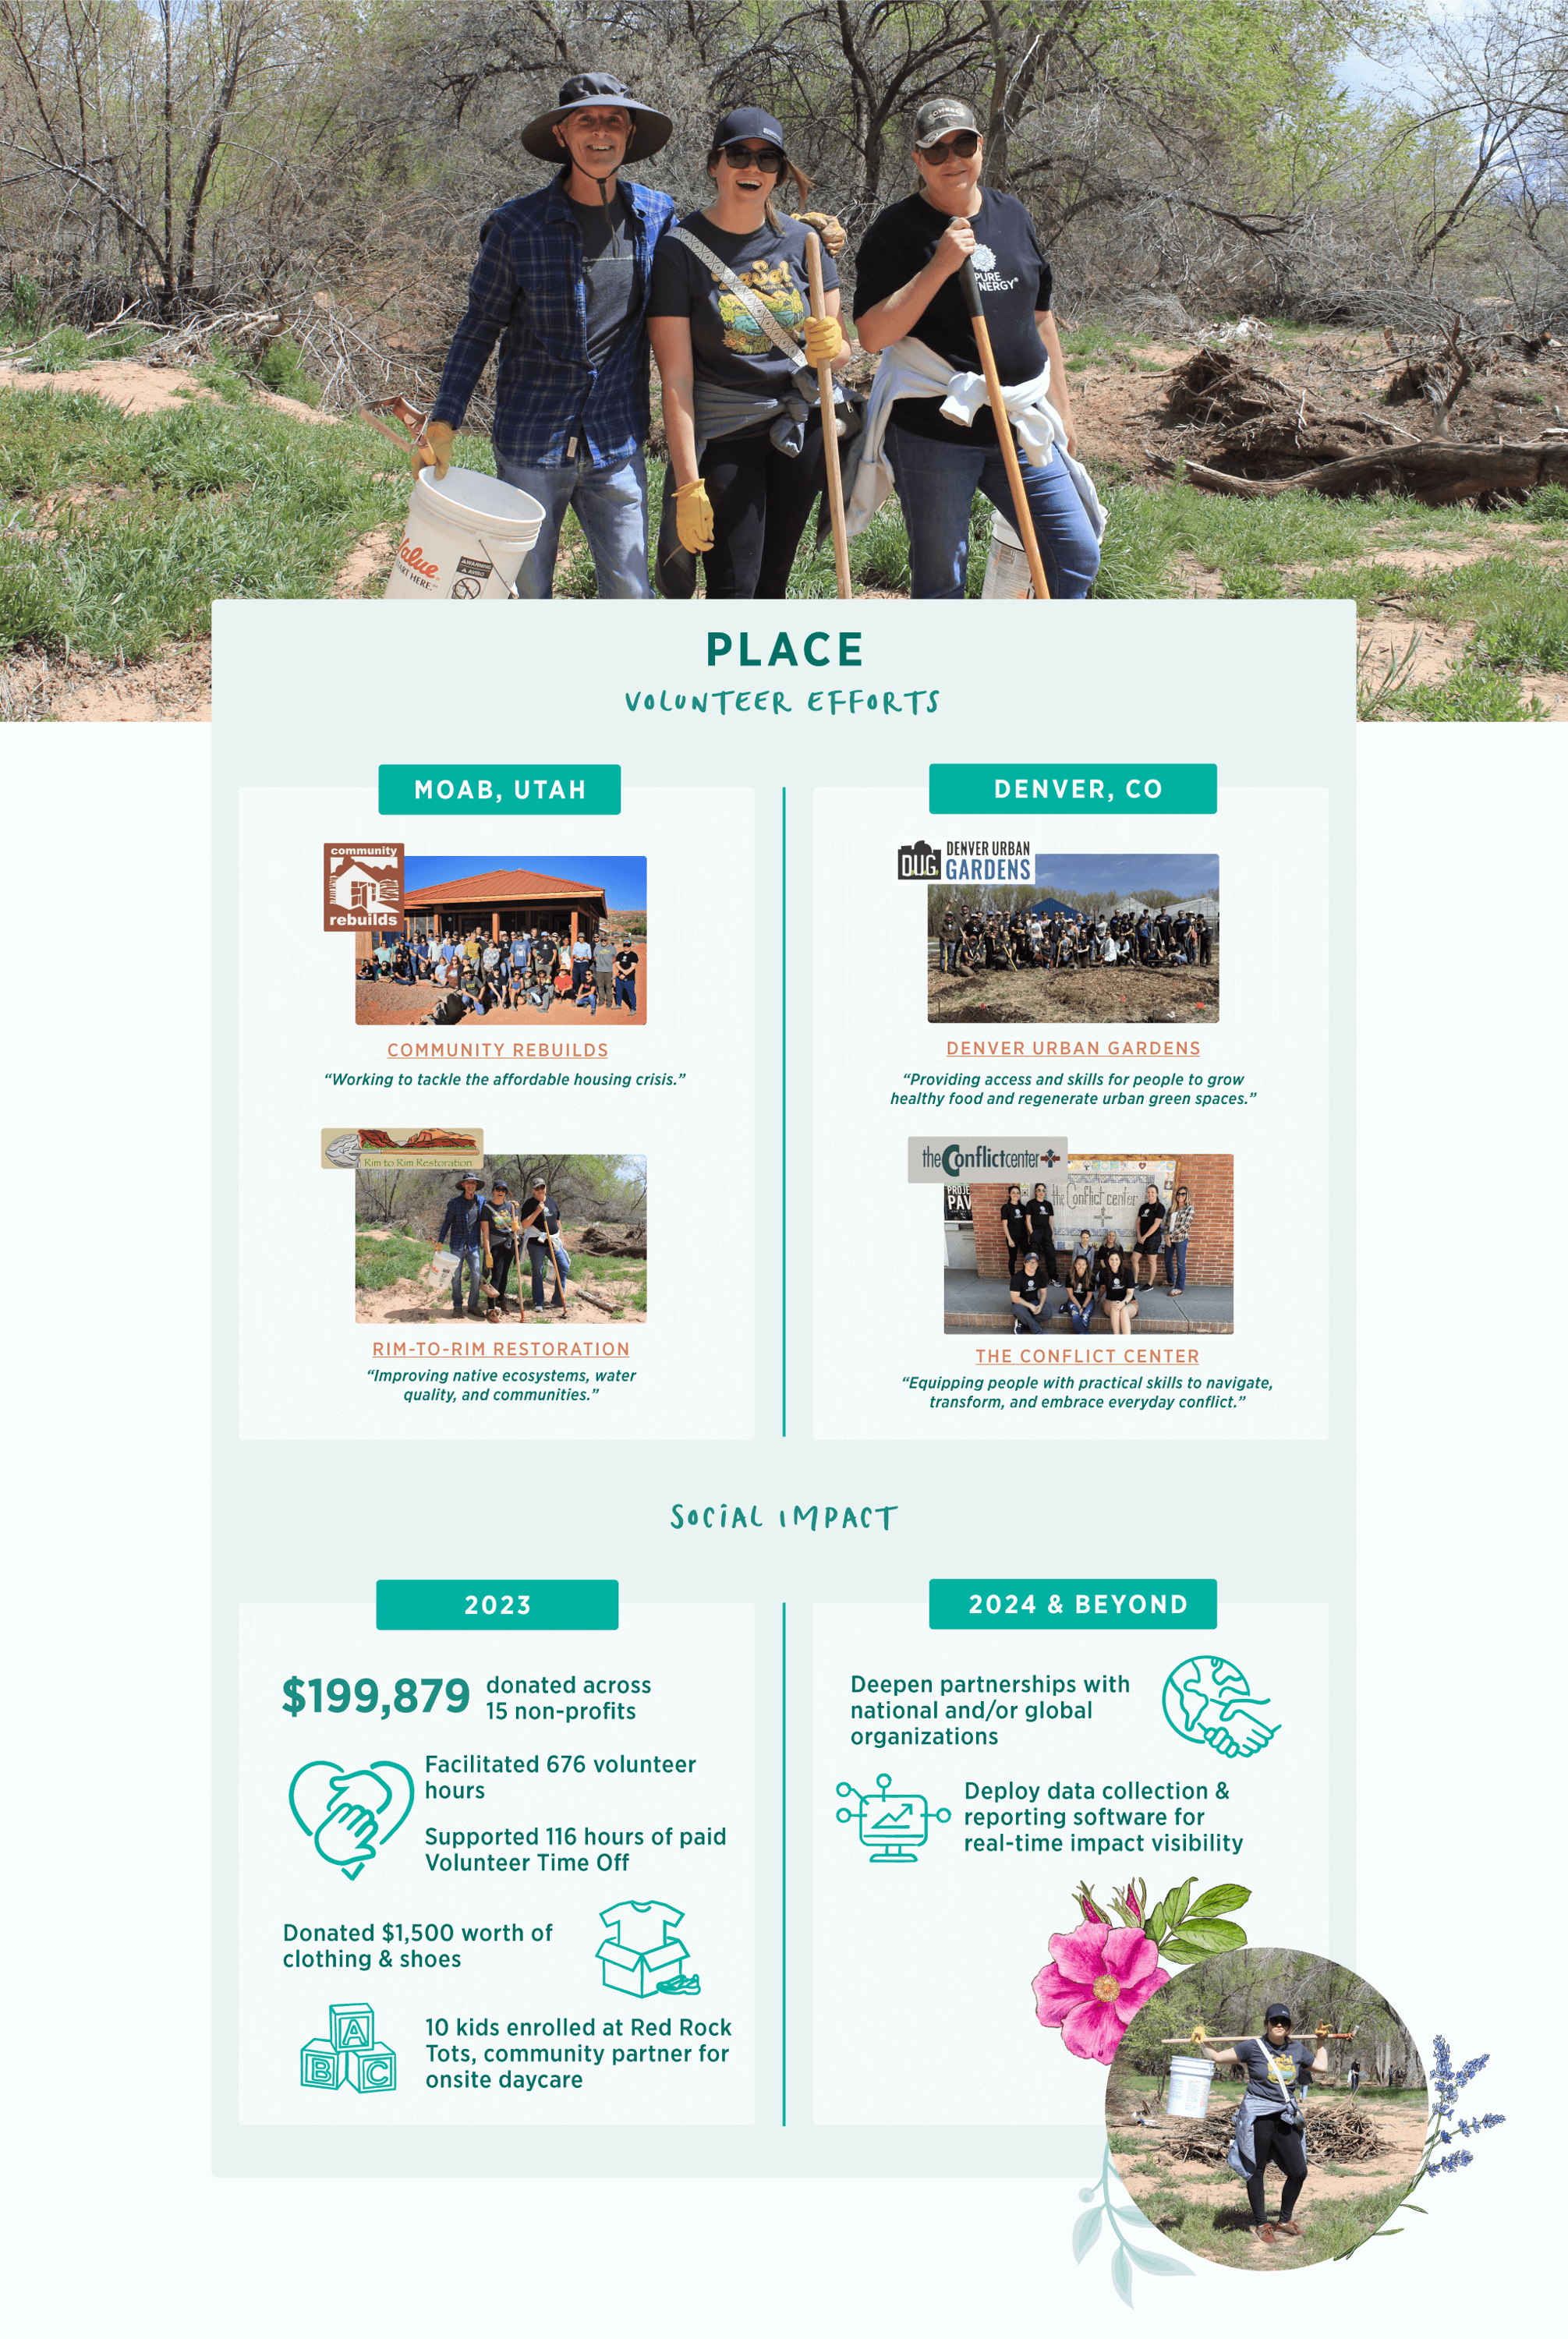 Place (Volunteer Efforts): Community Rebuilds, Rim to Rim Restoration, Denver Urban Gardens, Conflict Center